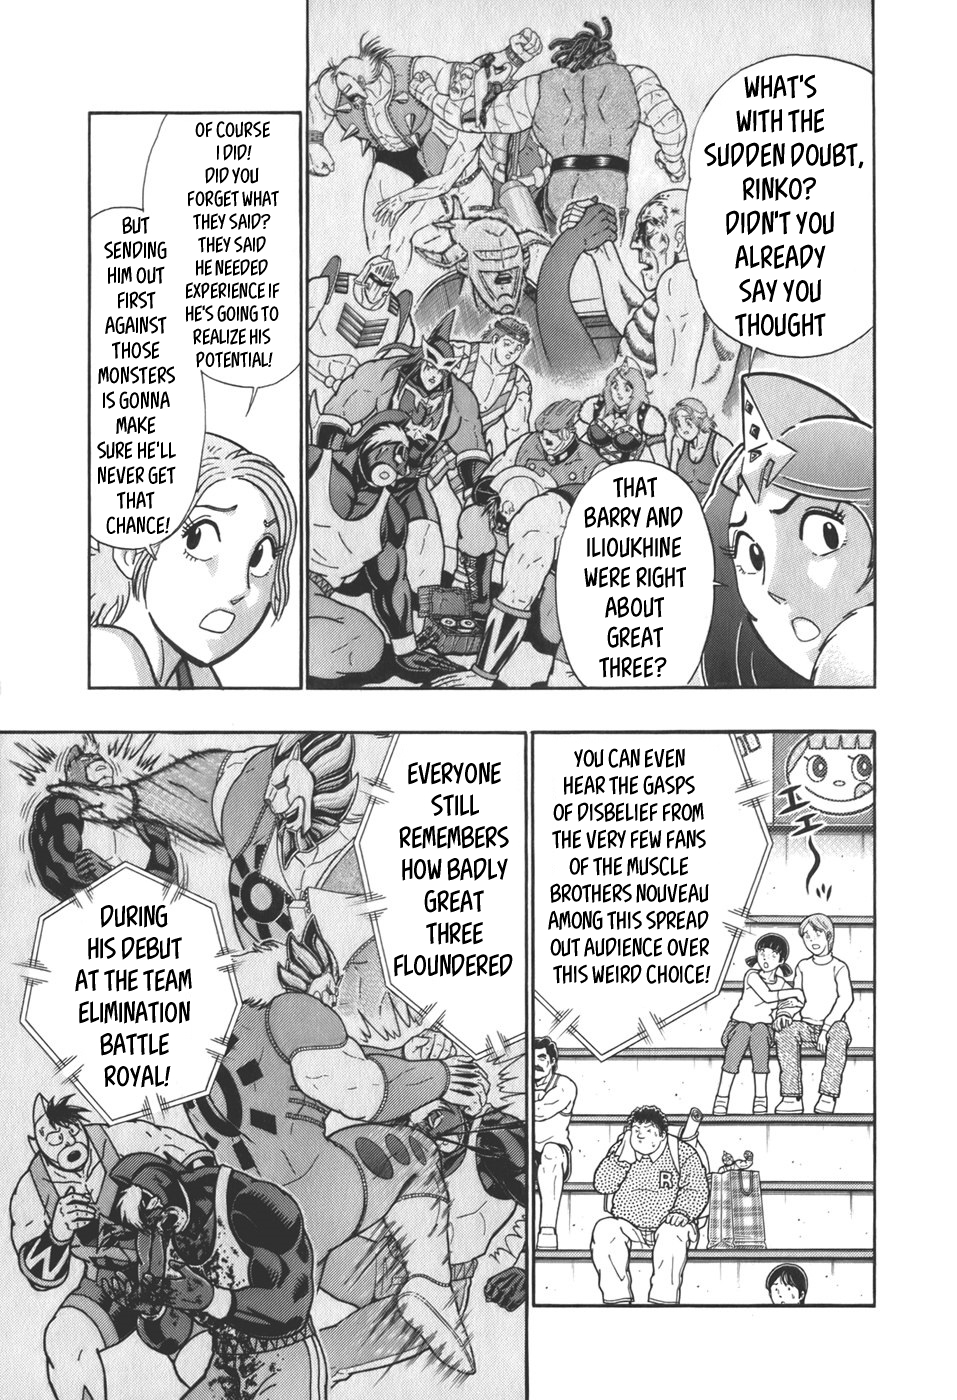 Kinnikuman Nisei: Ultimate Chojin Tag Vol. 6 Ch. 60 A Head On Clash of Chojin Power!